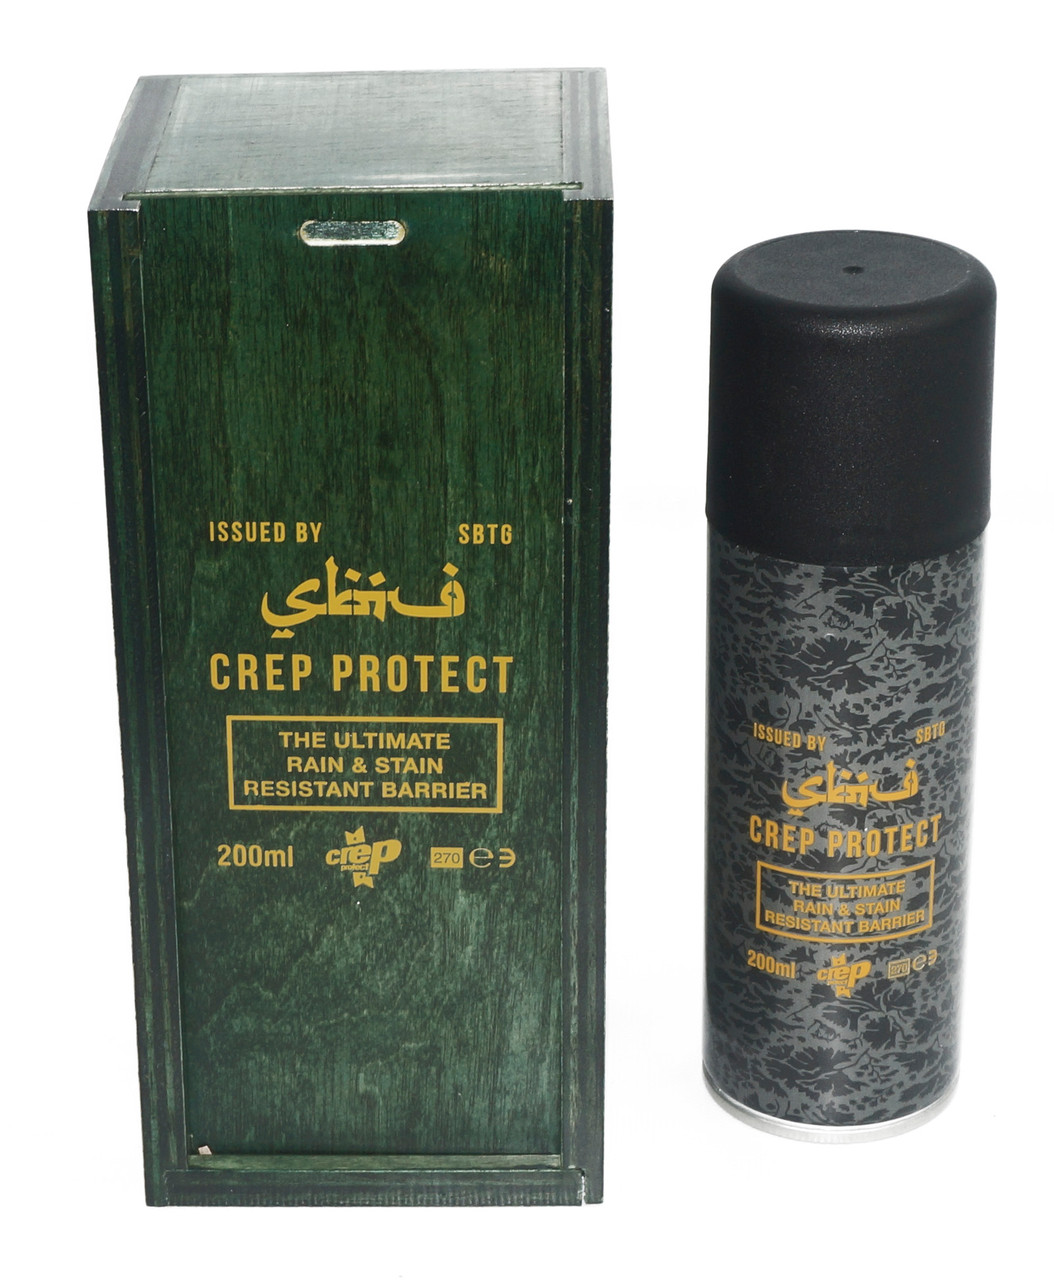  Crep Protect Shoe Protector Spray - Rain & Stain